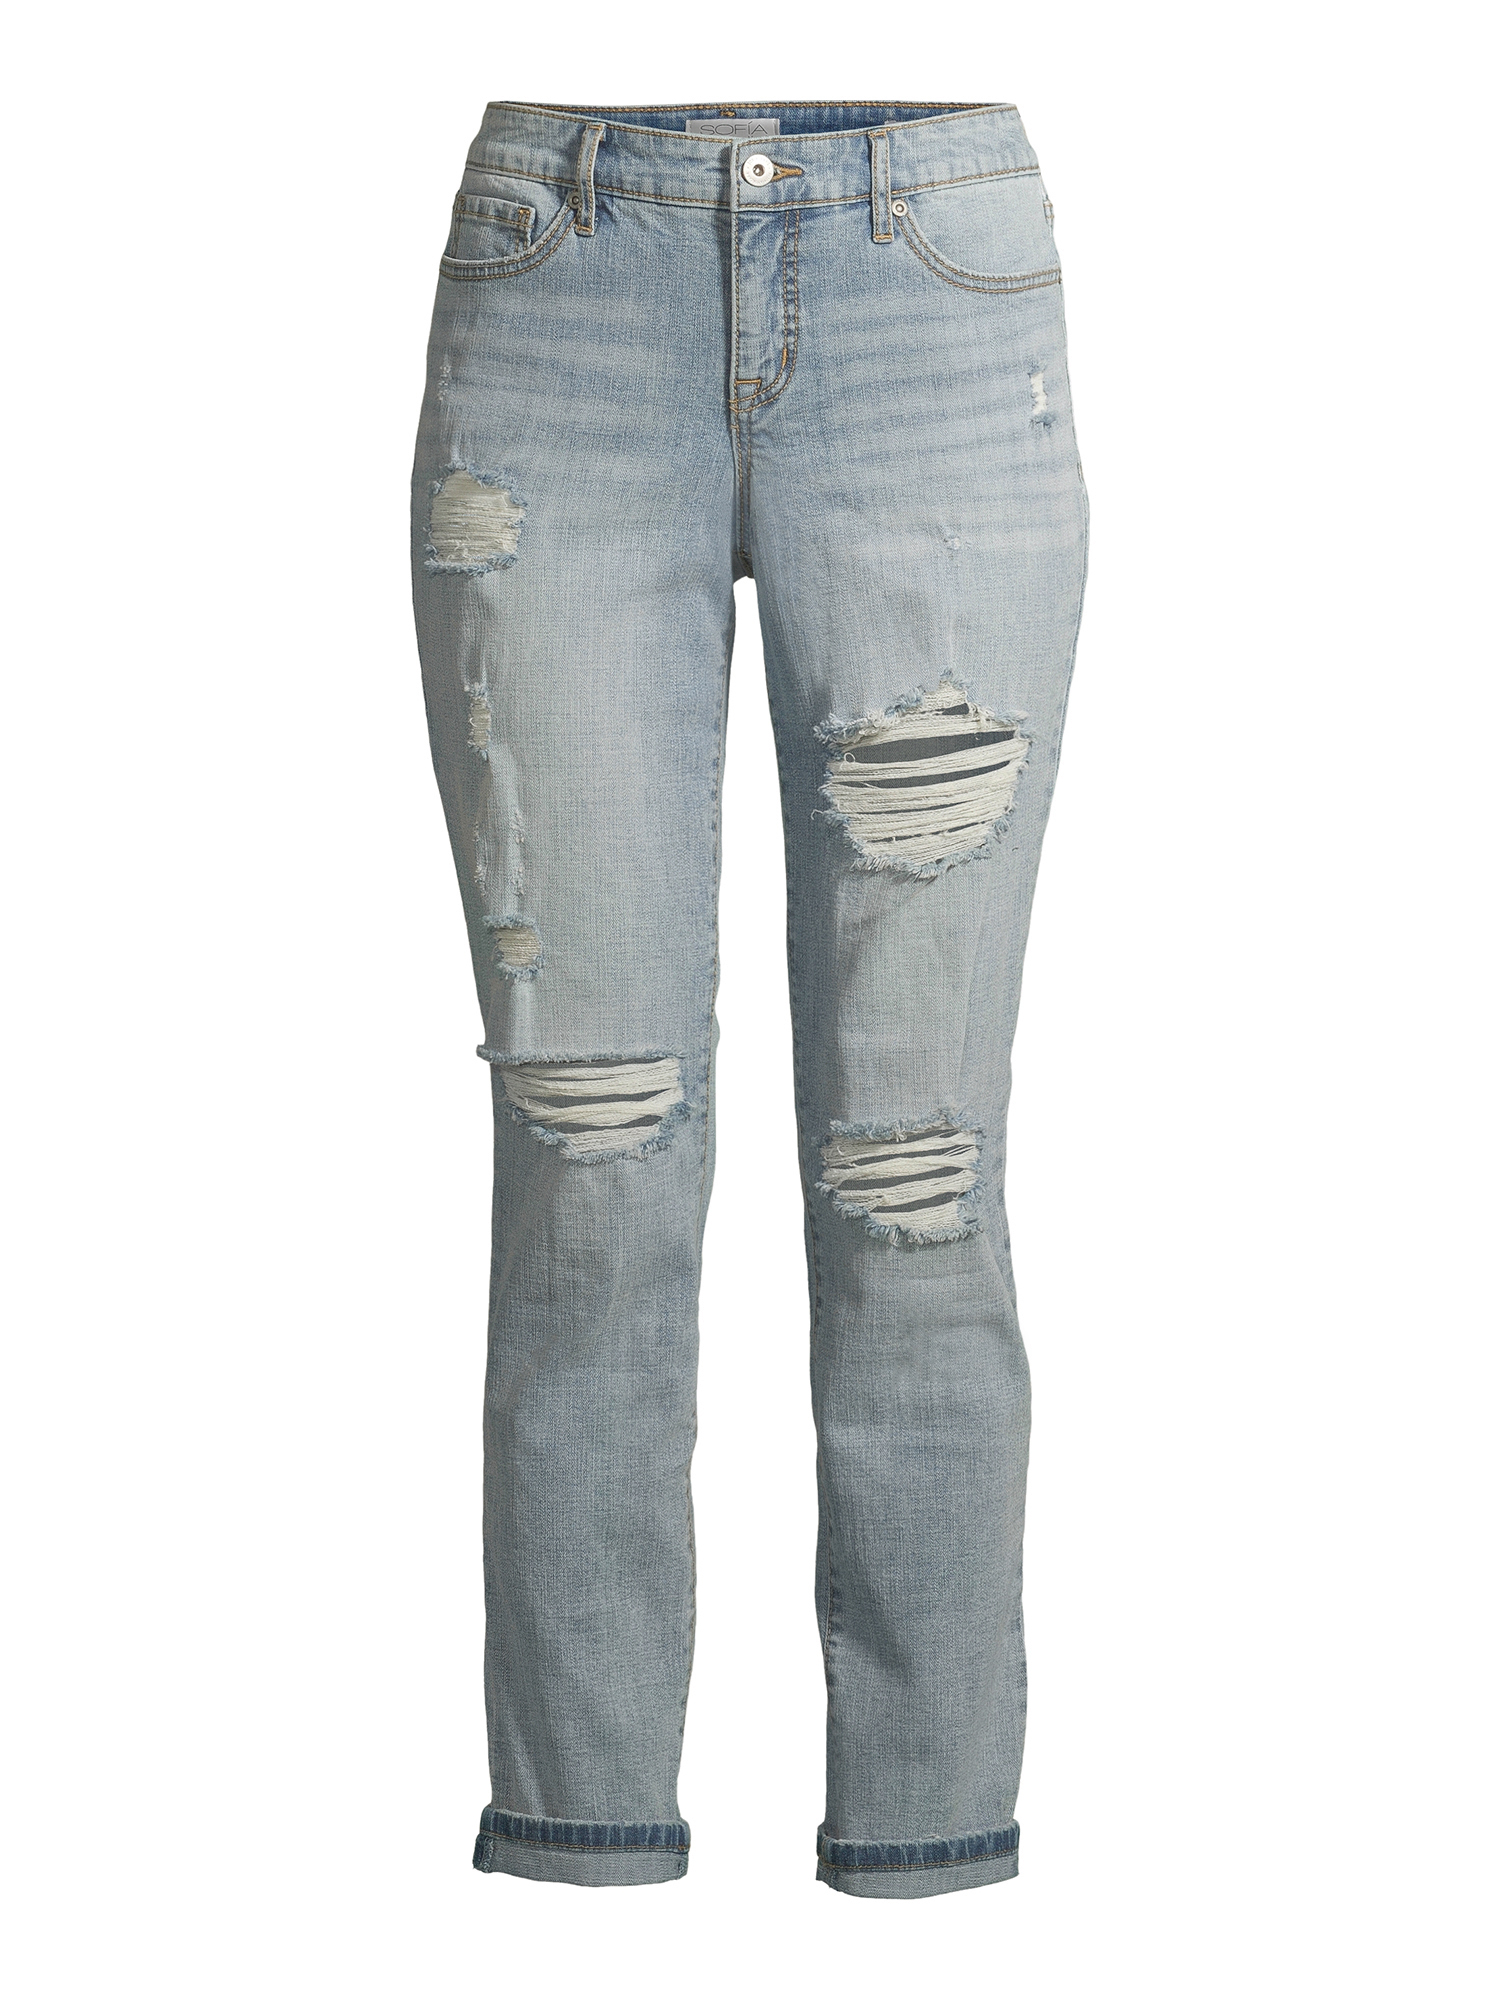 Sofia Jeans by Sofia Vergara Women's Bagi Boyfriend Jeans with Roll Cuff - image 3 of 7